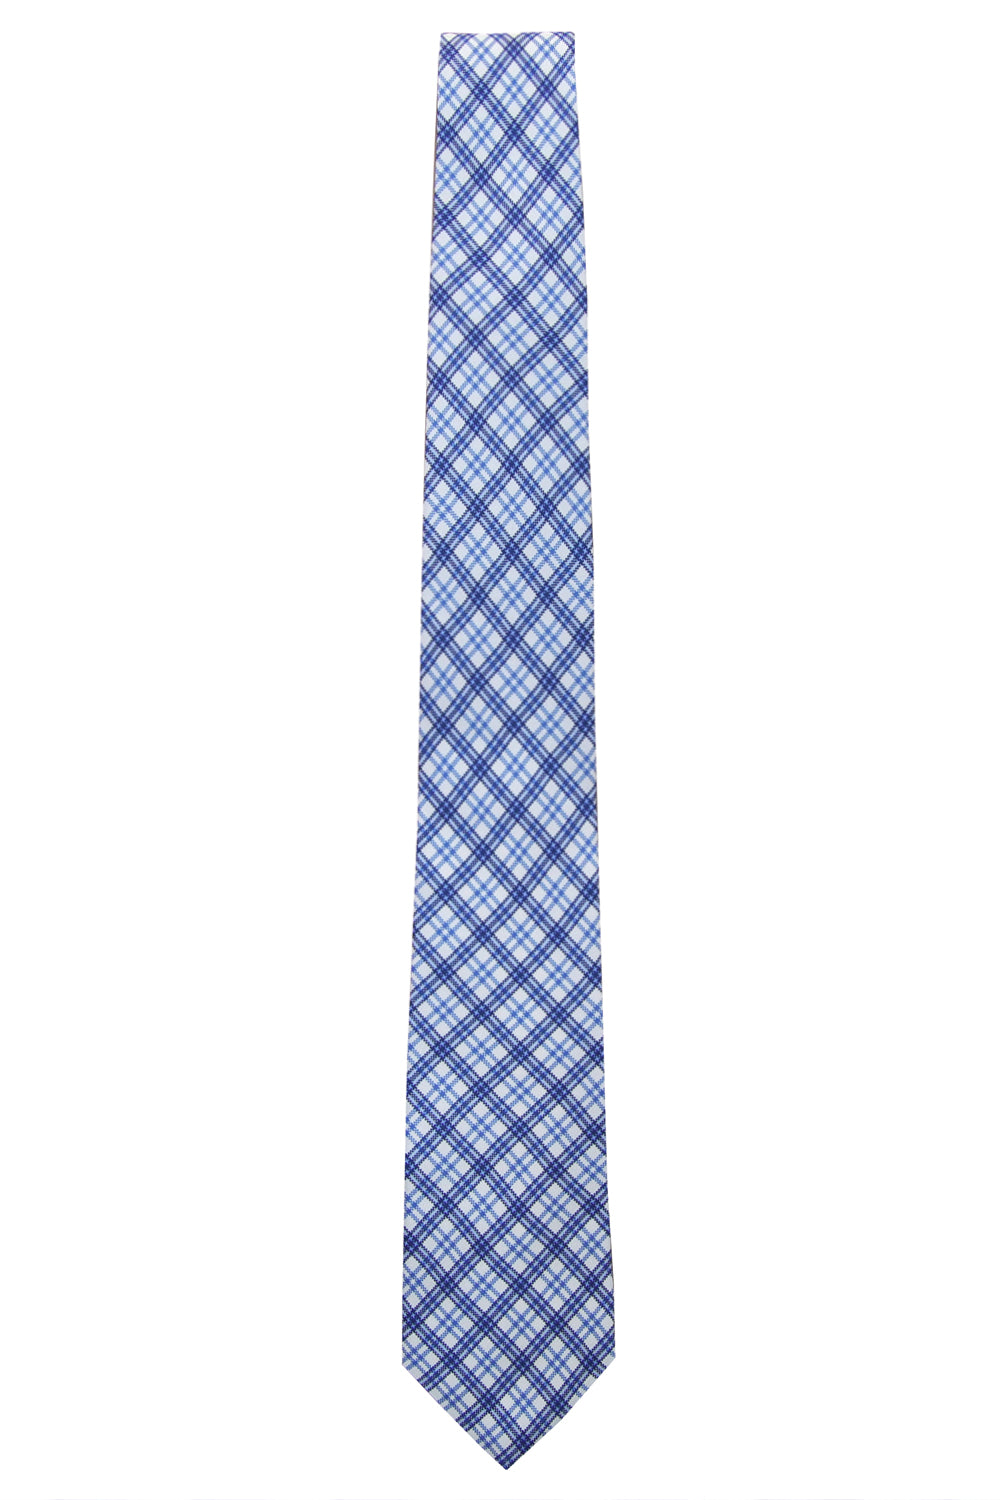 CHURCH'S Cravatta in seta